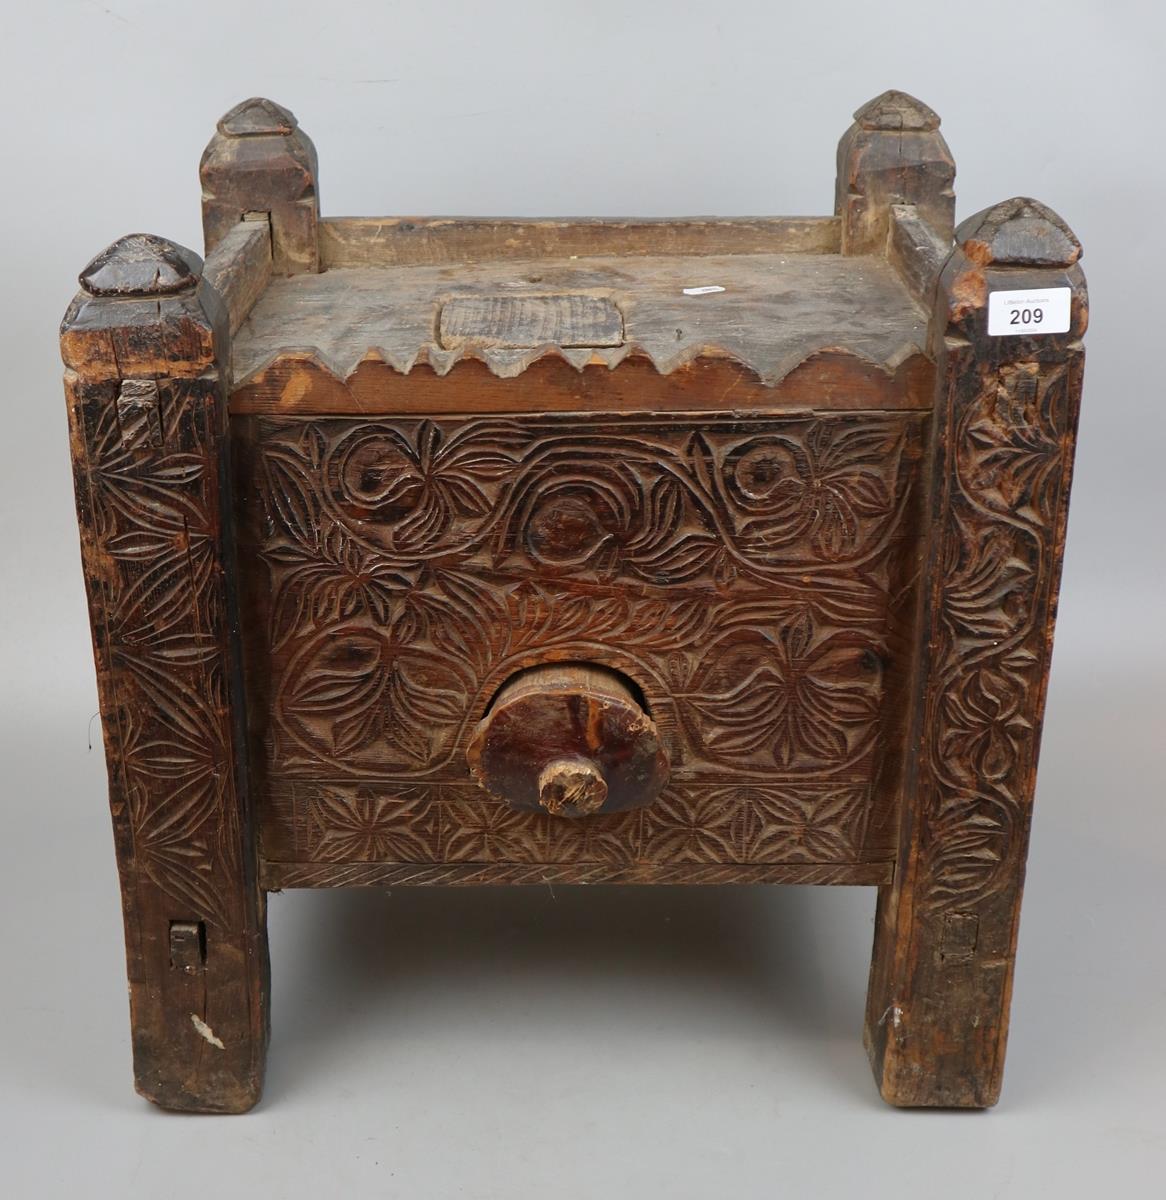 Antique carved Indian chest - Approx size: W: 49cm D: 36cm H: 53cm